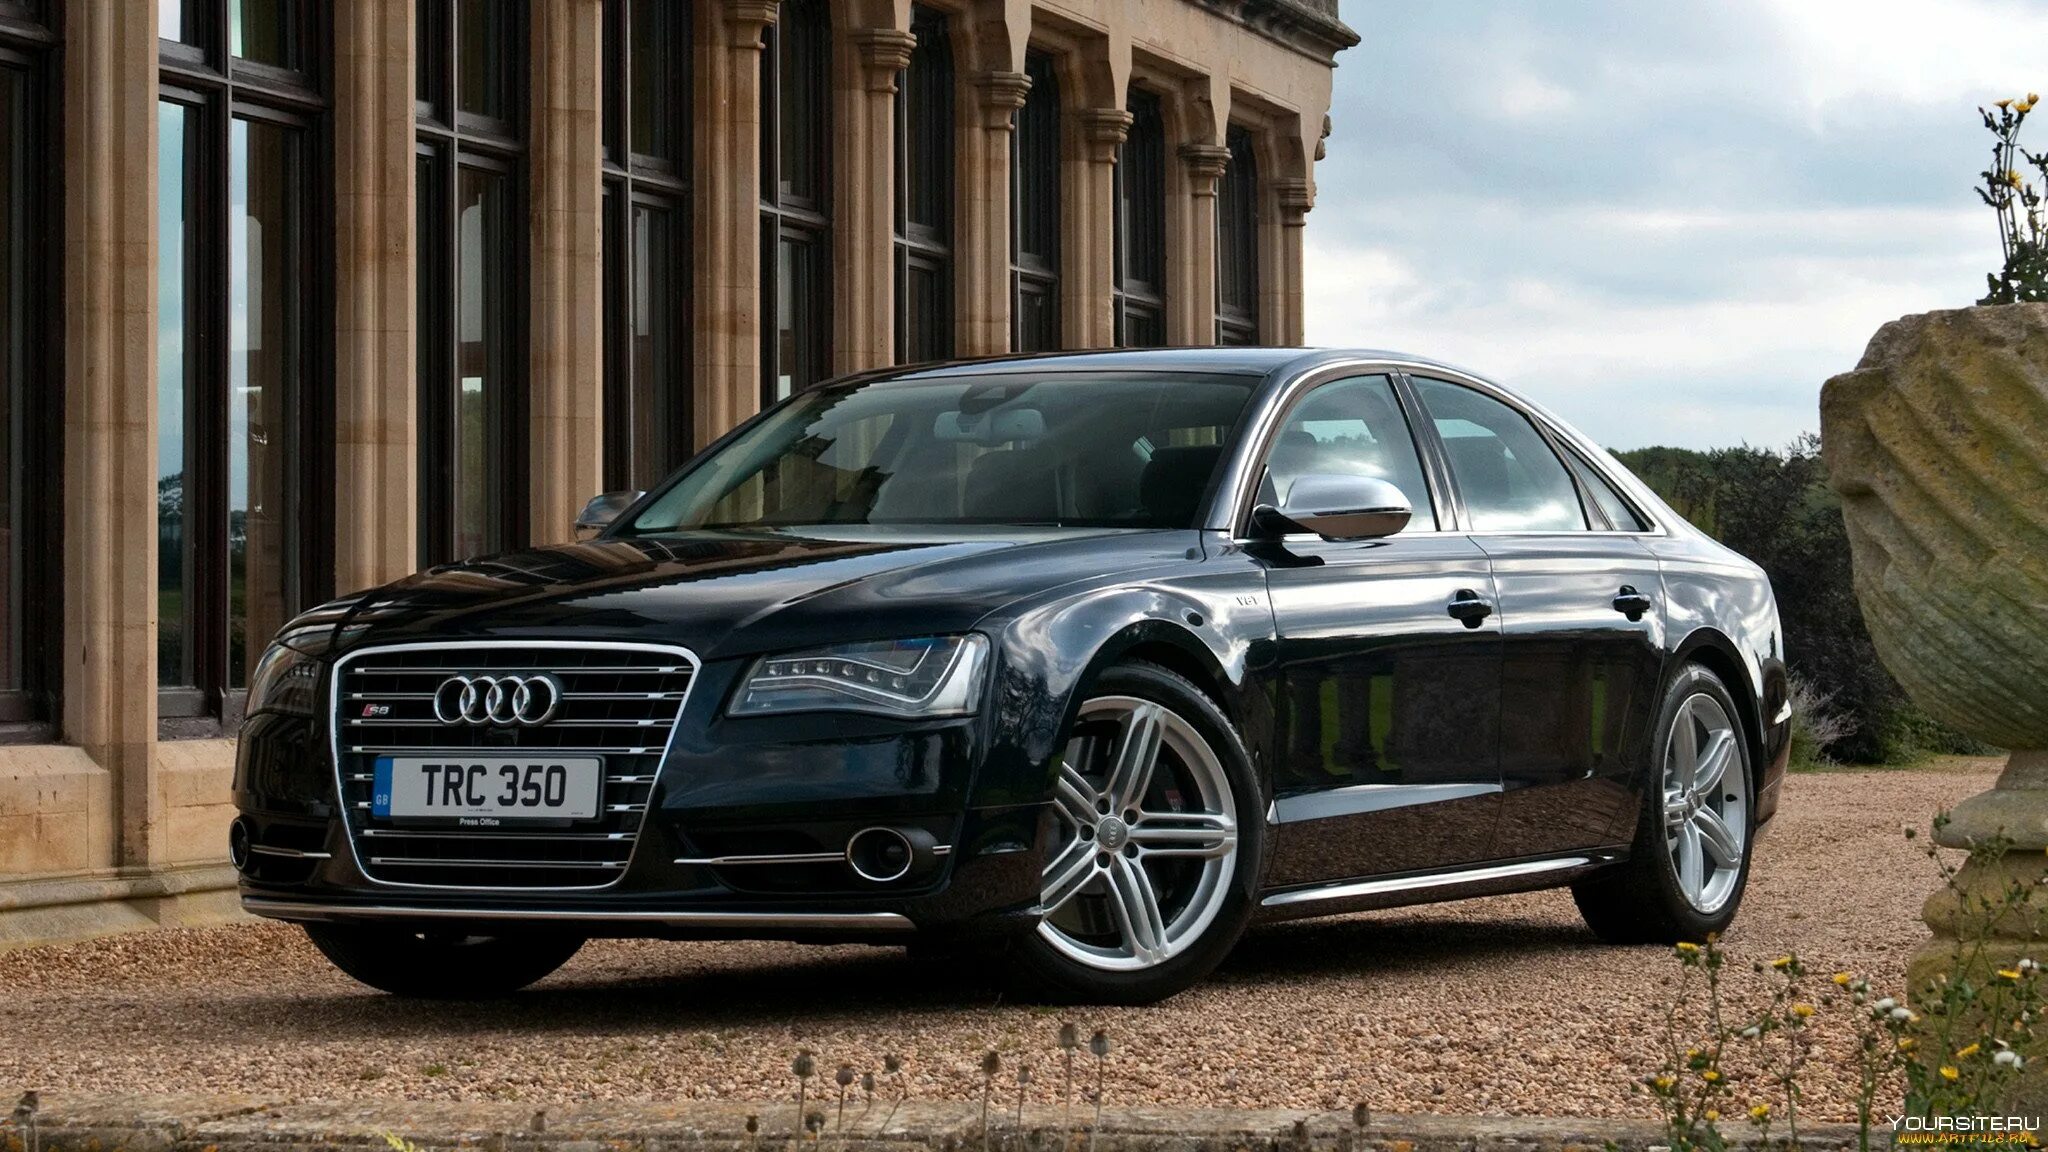 Автомобиль ауди. Audi s8 d4 2012. Ауди а8. Машина Ауди а8 черная. Audi a8 Black Edition.